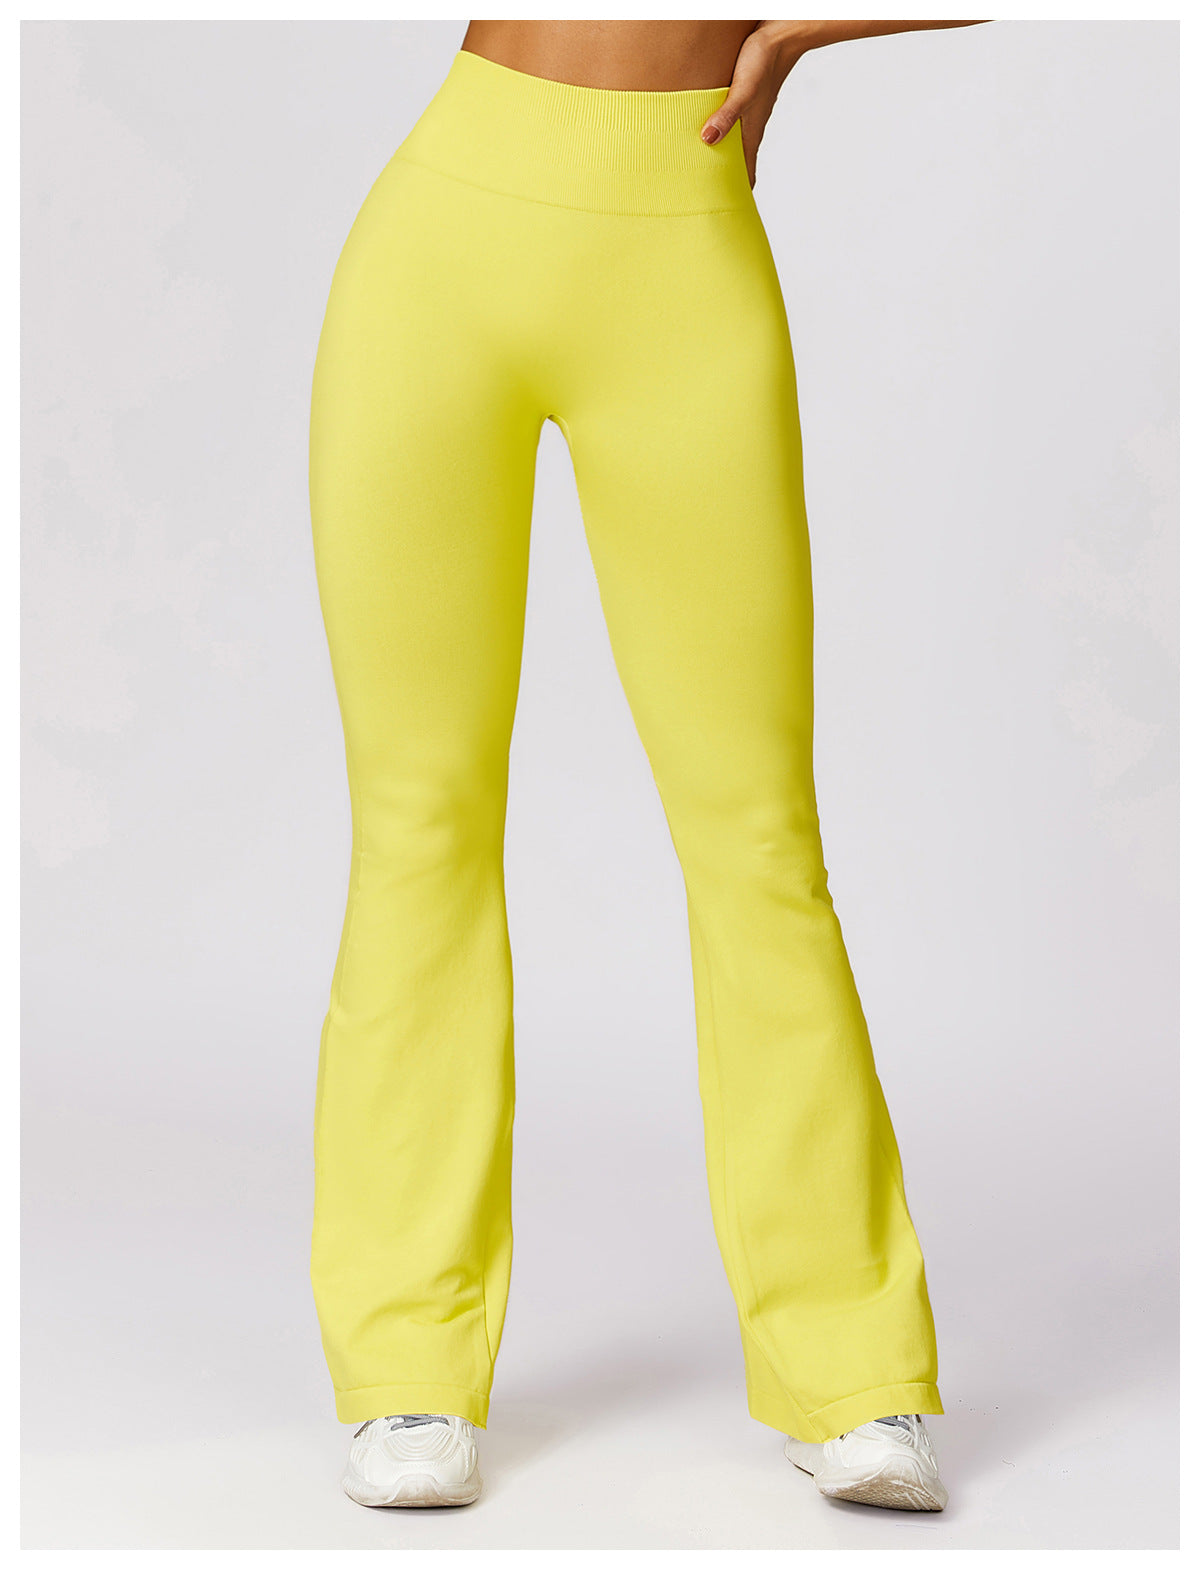 High Waisted Yoga Pants, Gold And Yellow Herringbone Style Sports – Natty  Klads